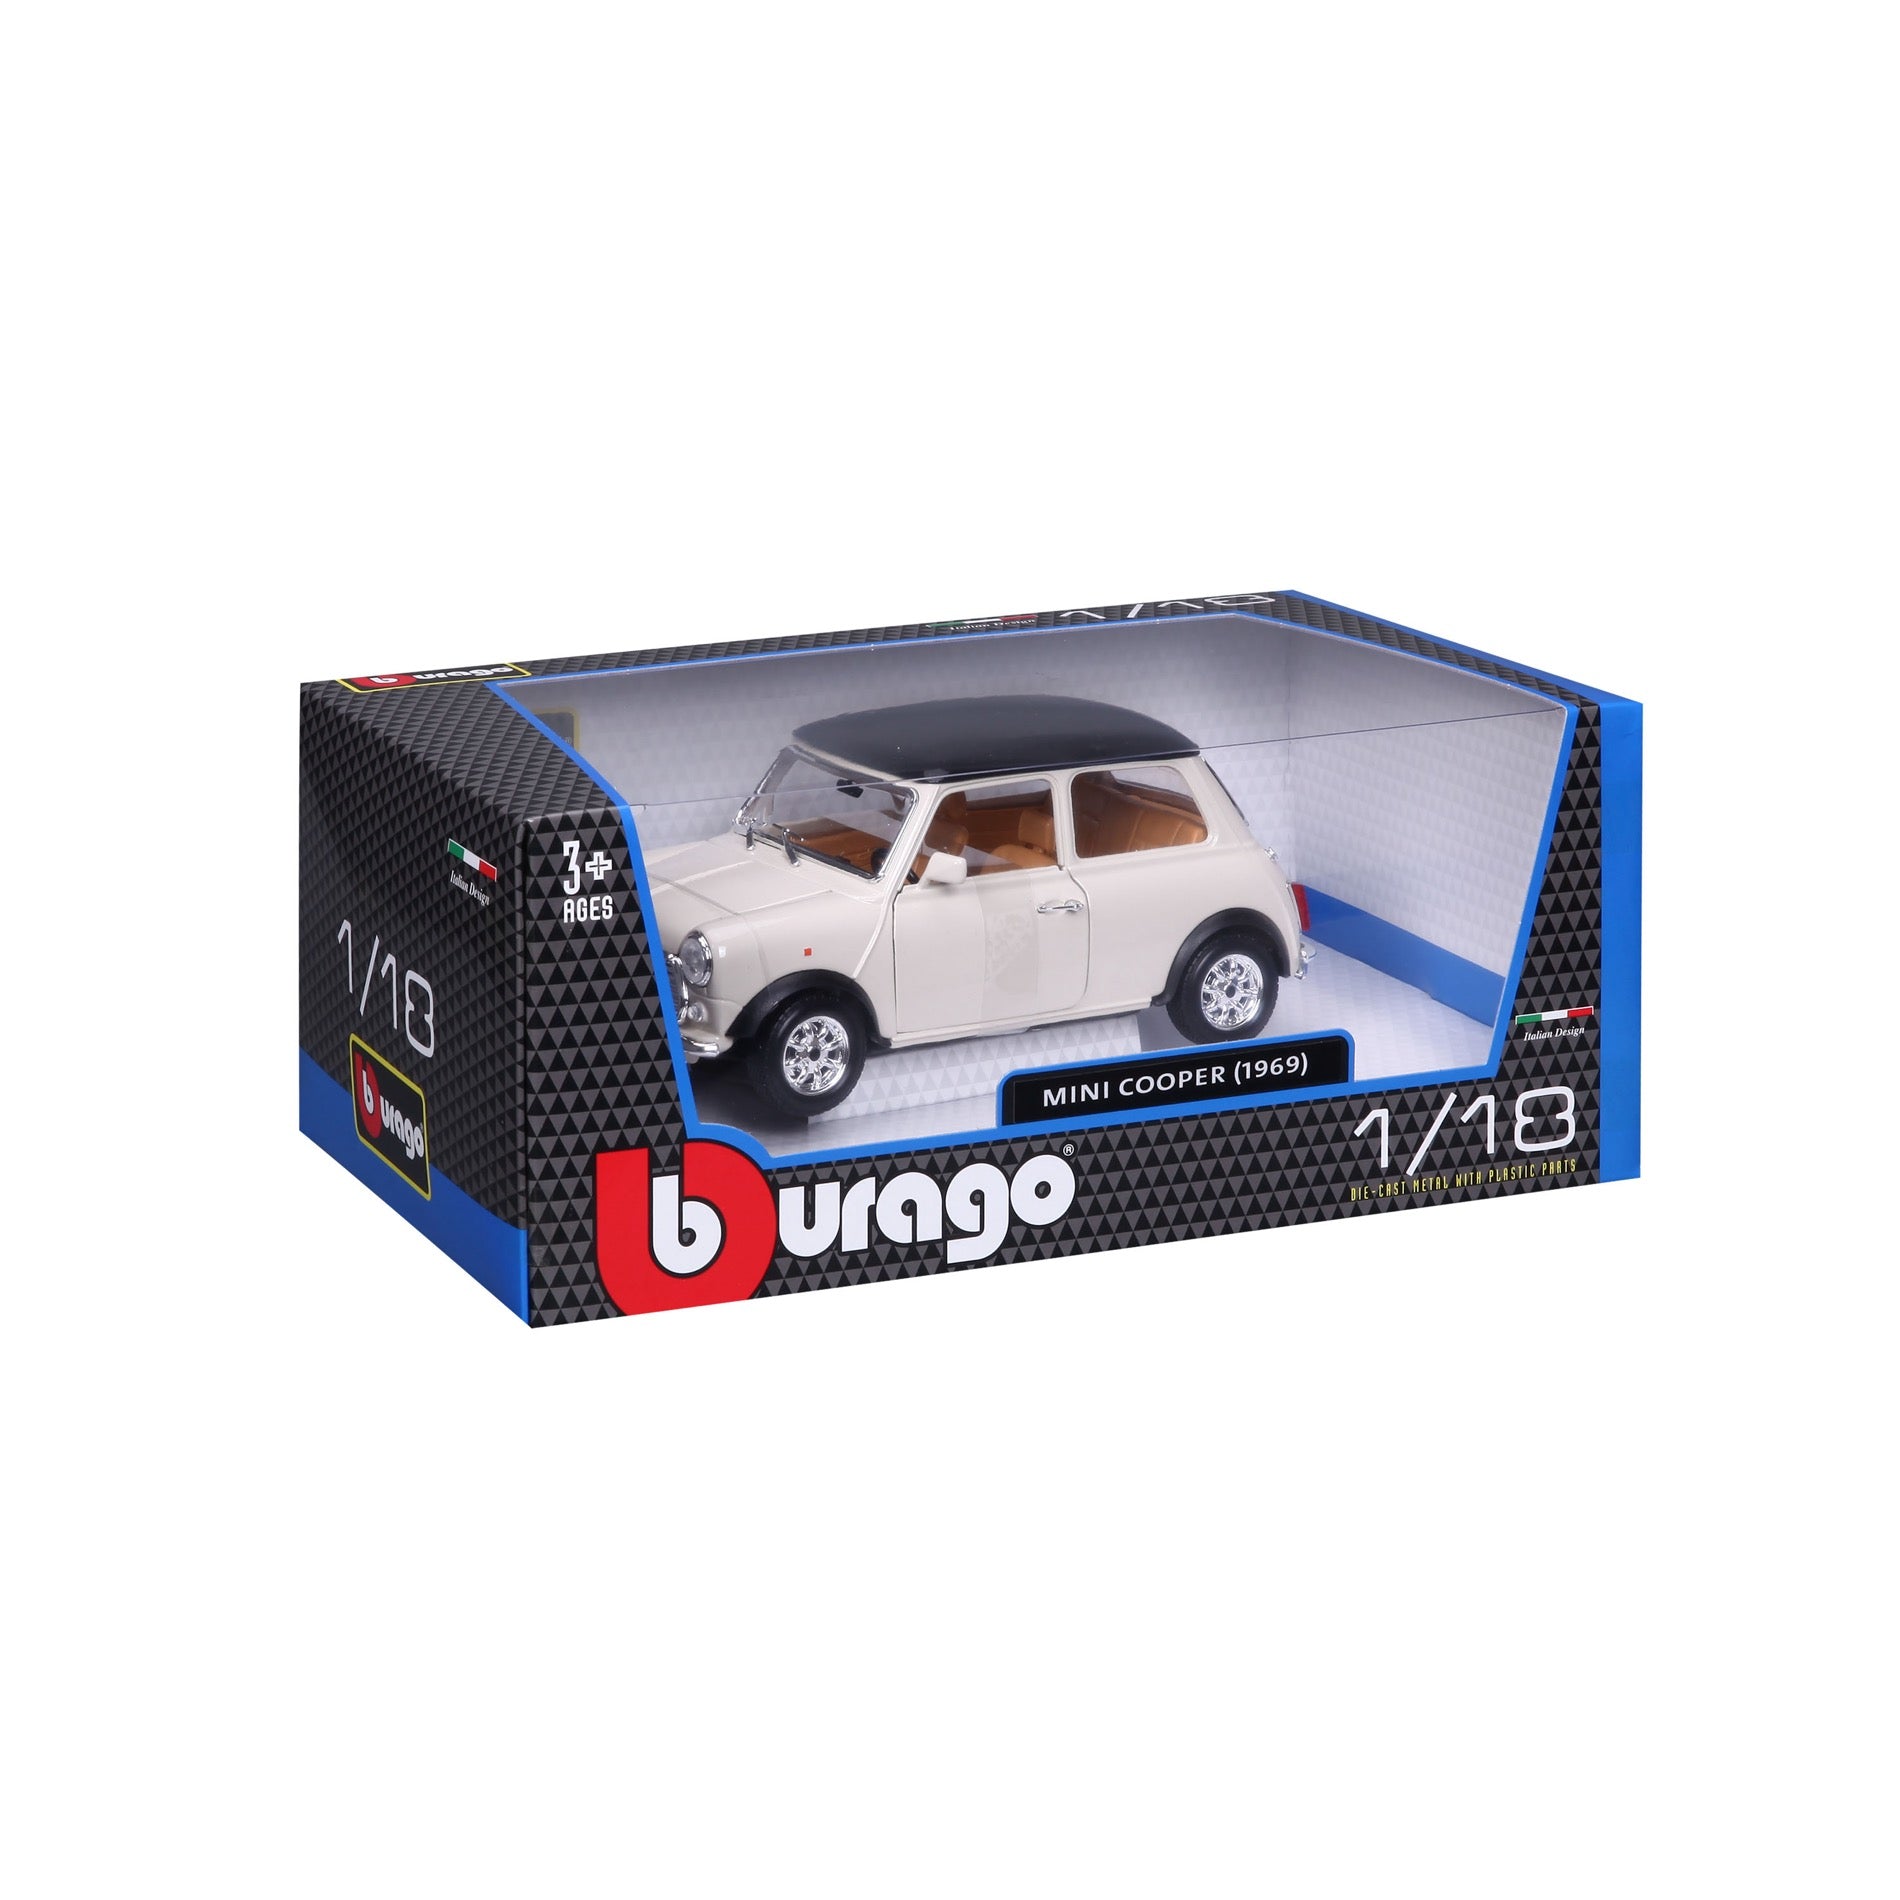 18-12036 Bburago - MINI COOPER (1969) Beige/Black - 1:18